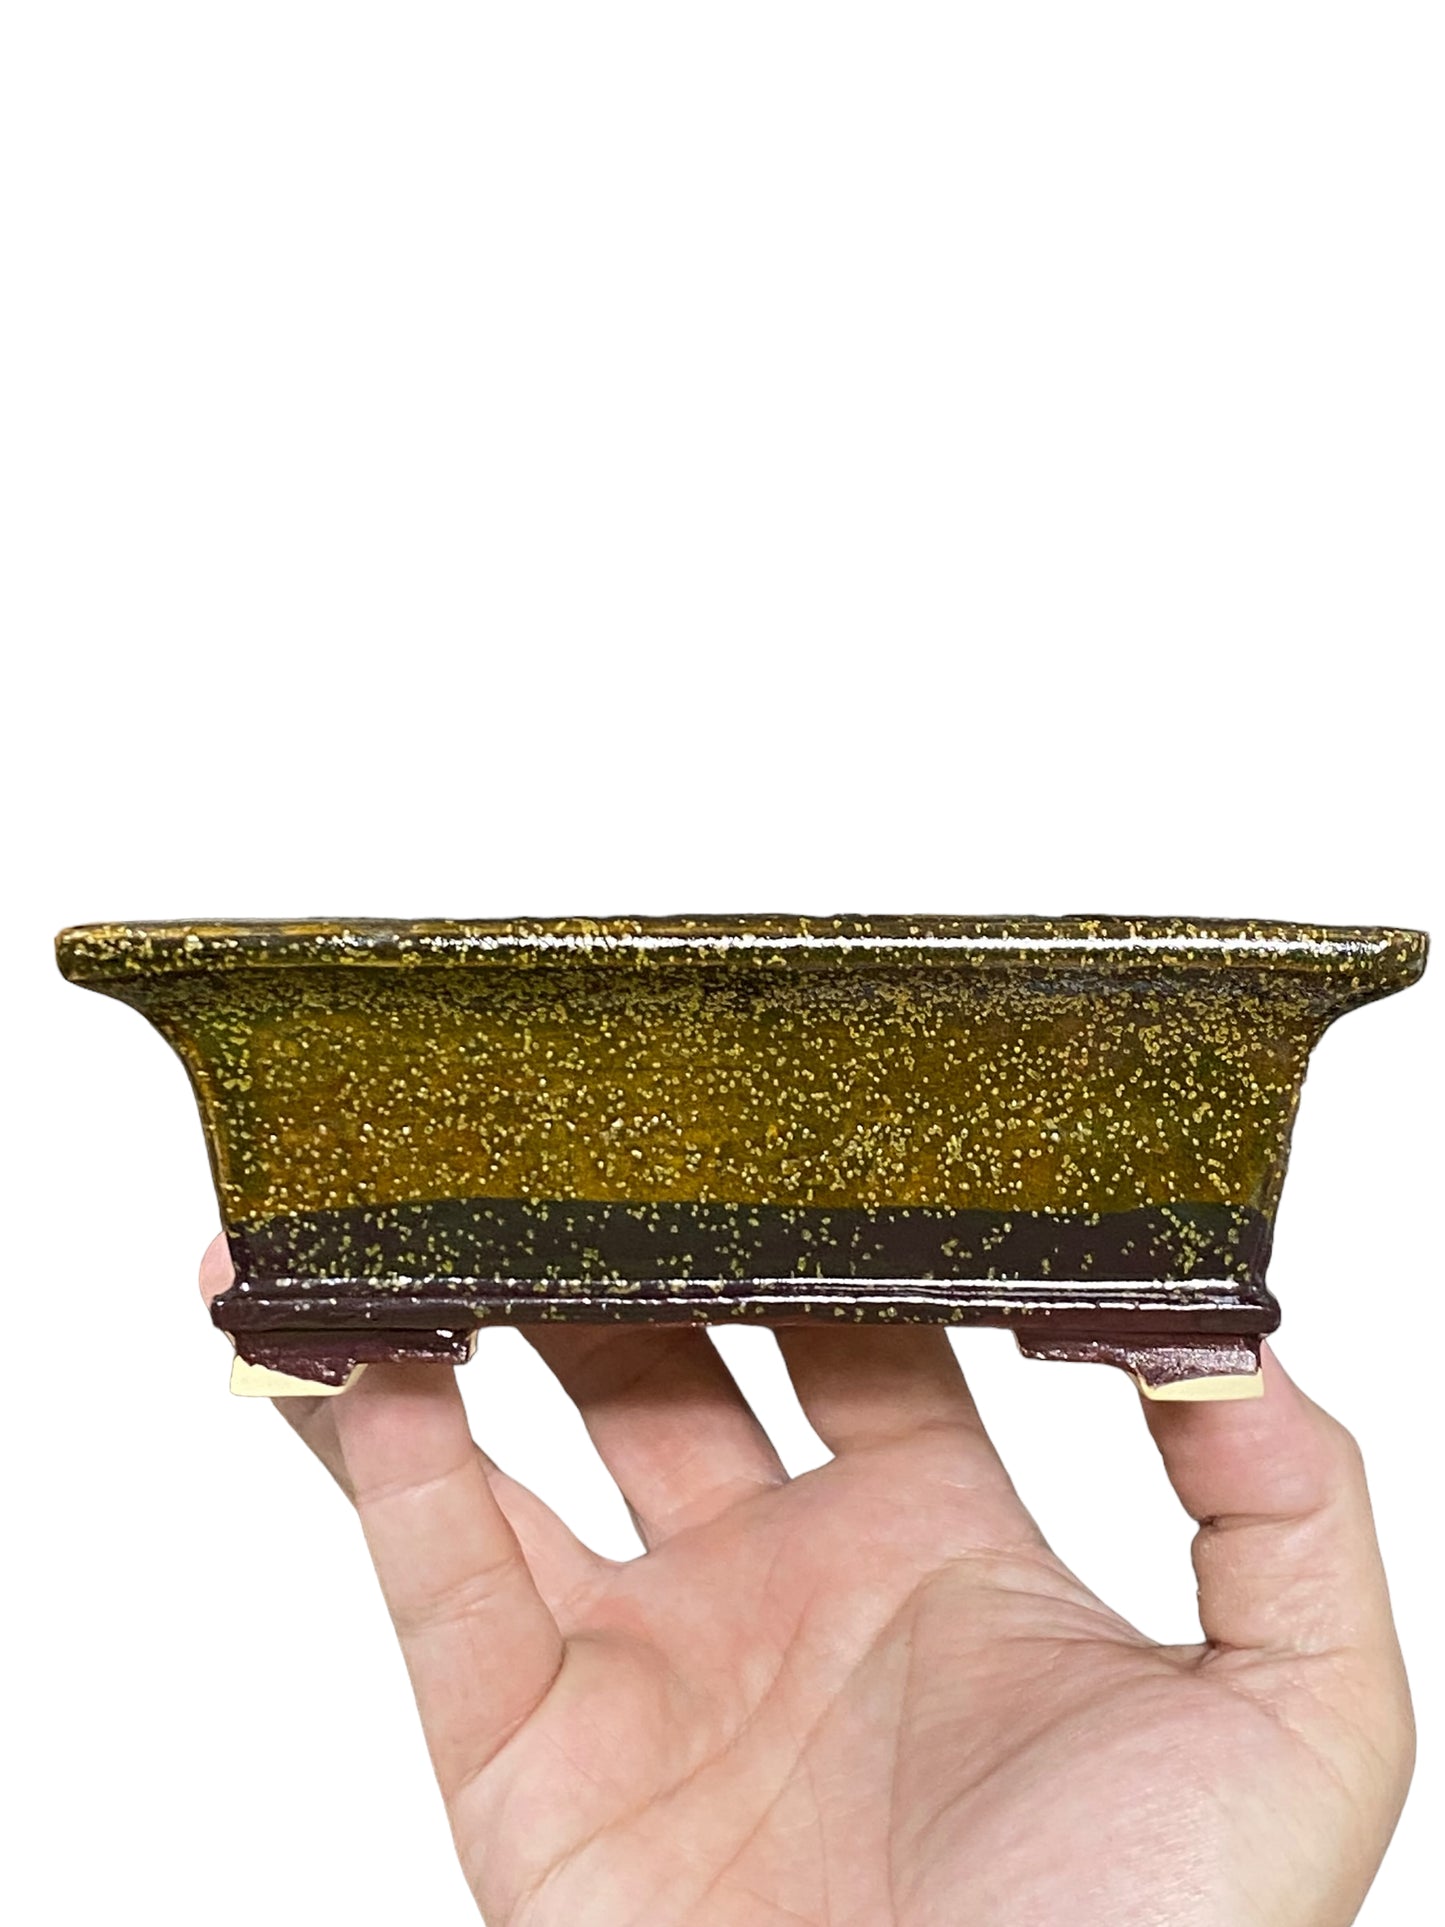 Fukuda Keiun - Triple Layered Rectangle Bonsai Pot (6-3/8" wide)